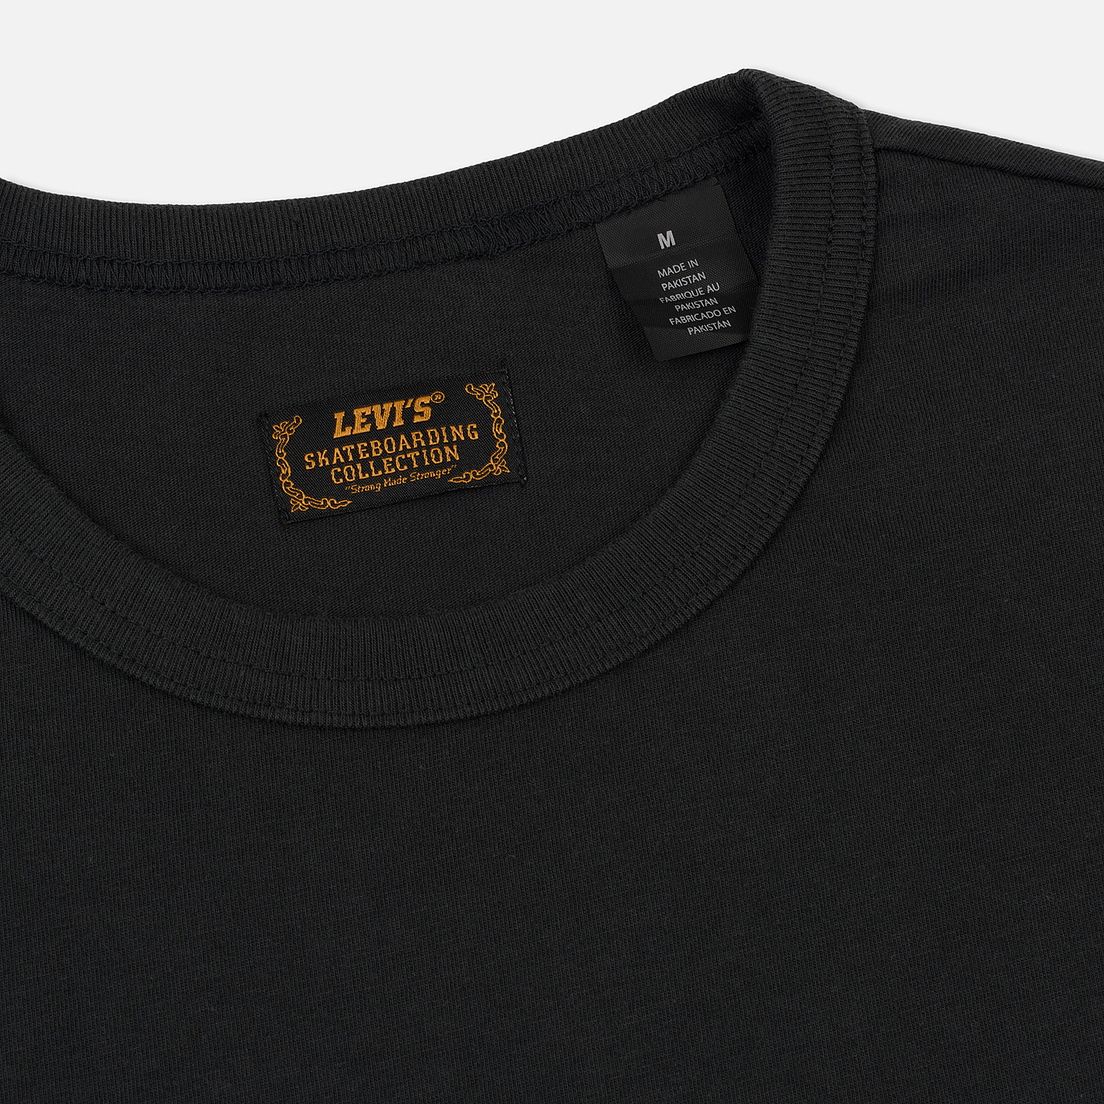 Levi's Skateboarding Комплект мужских футболок 2 Pack